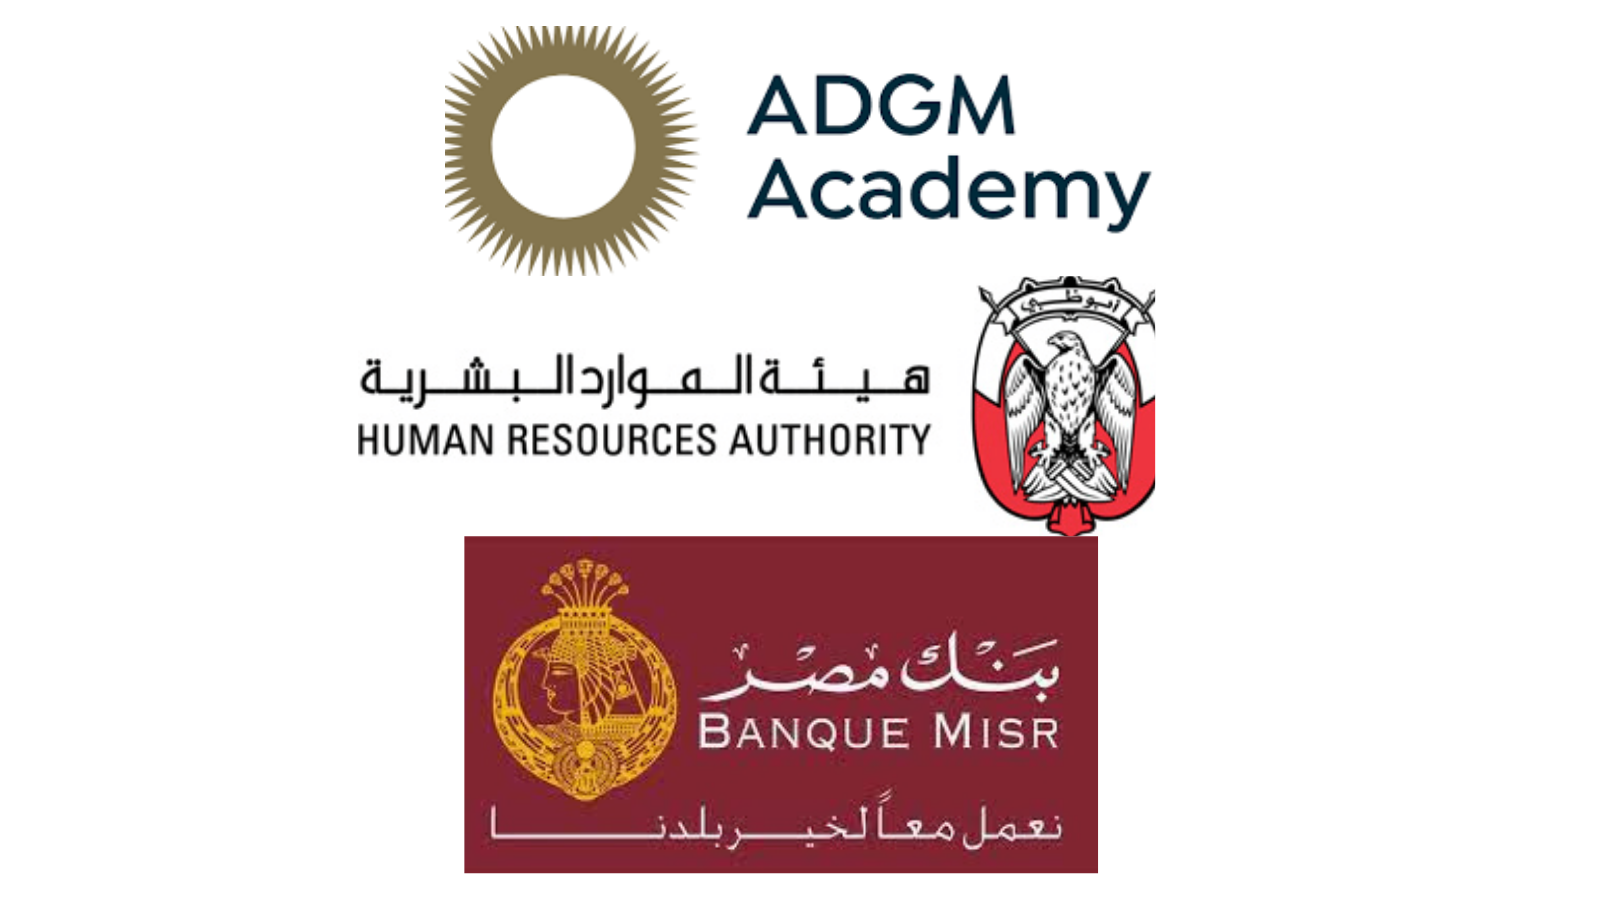 ADGMA, HRA & BANQUE MISR Logo's